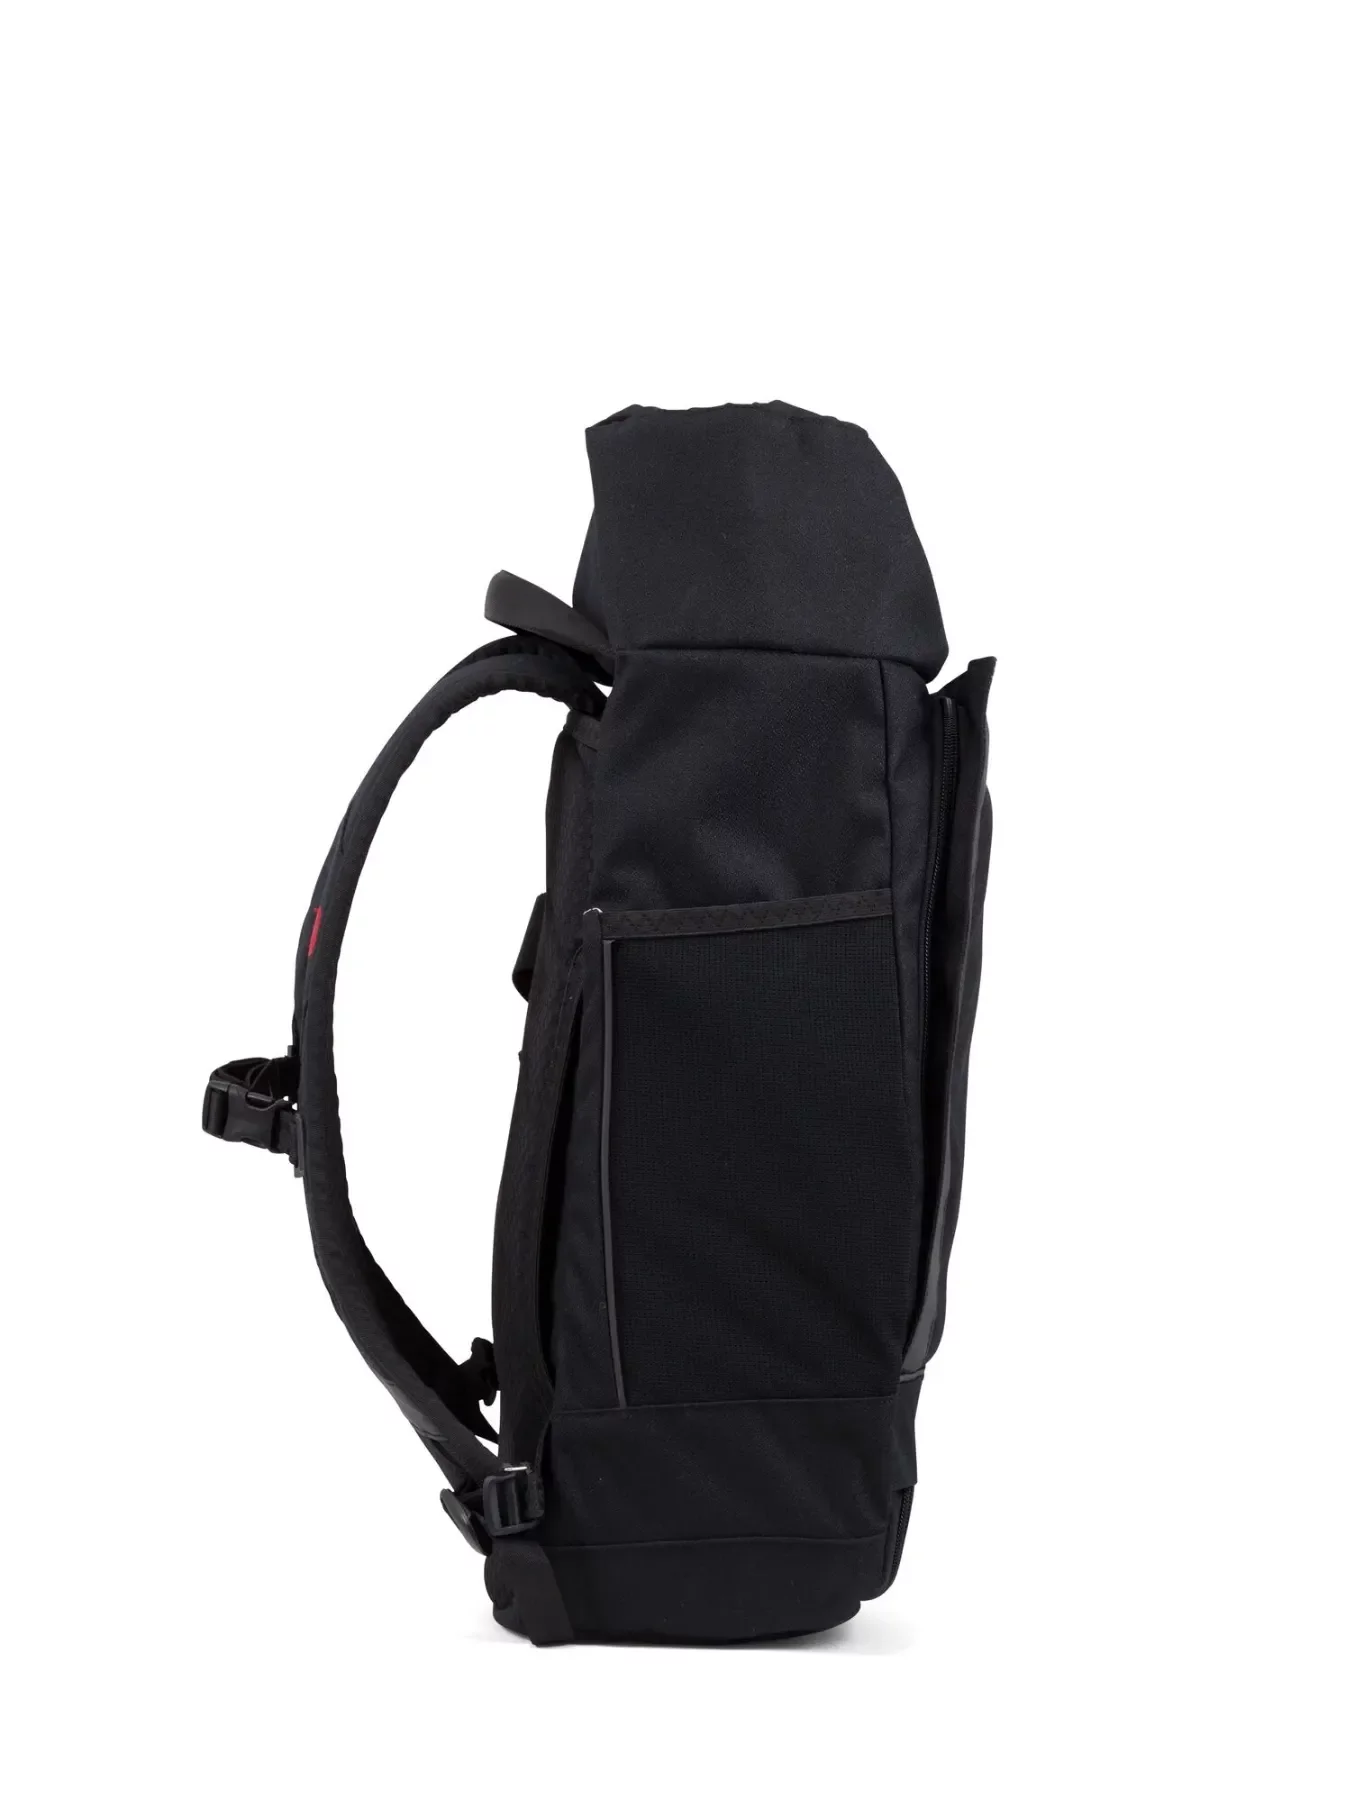 pinqponq Backpack BLOK medium - Licorice Black 3